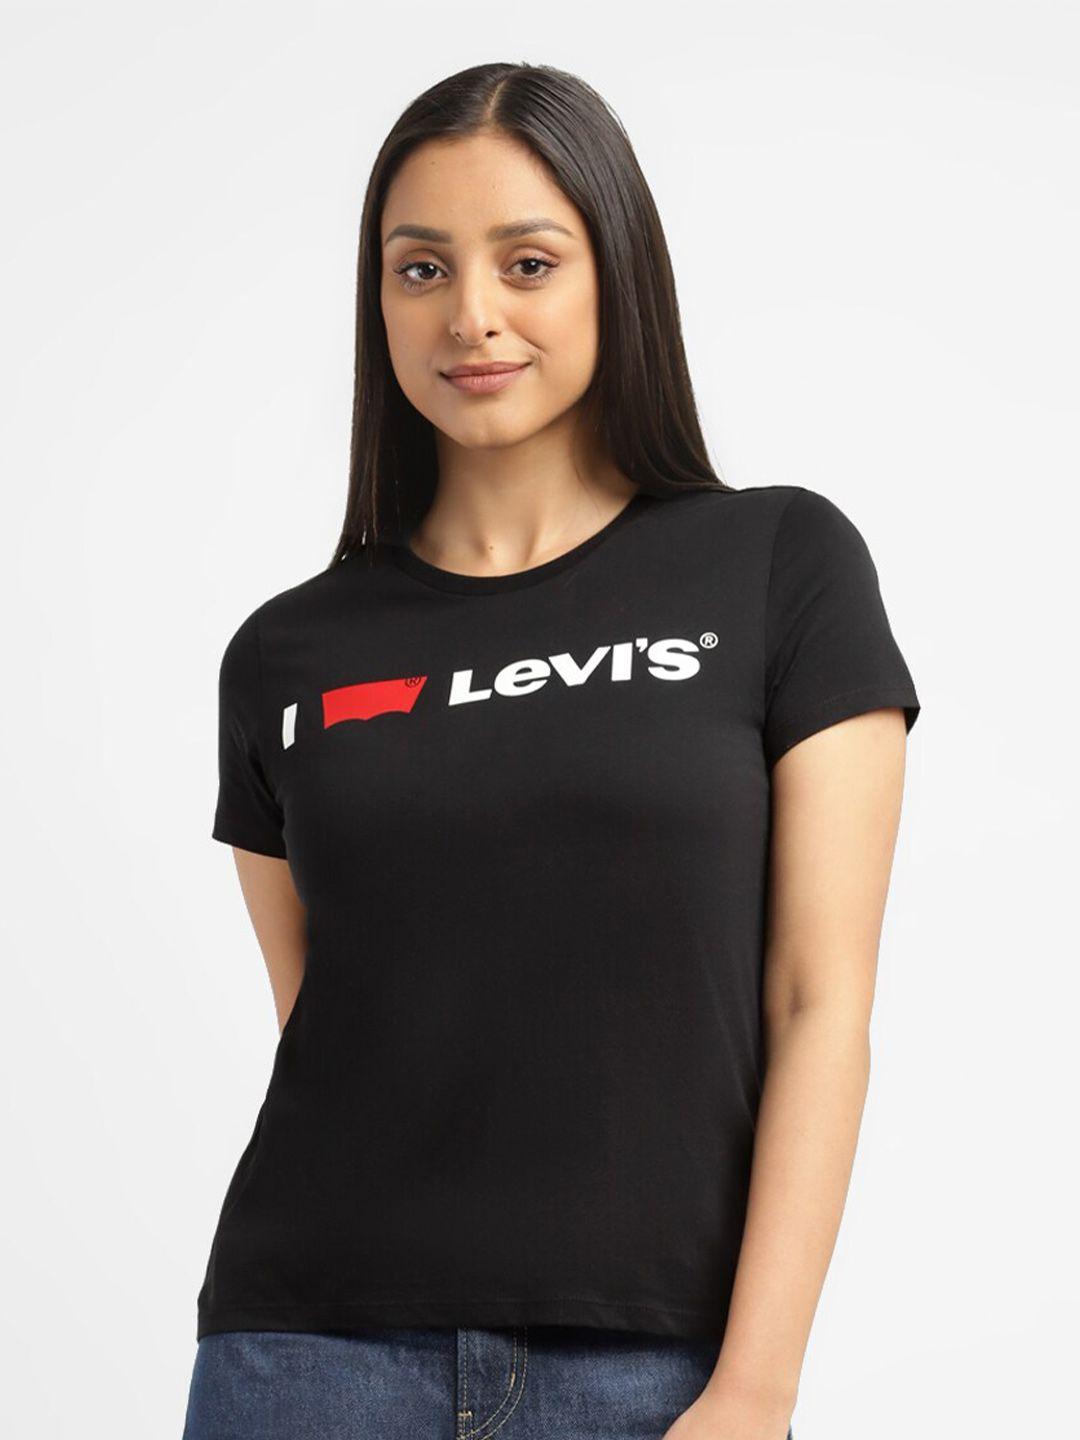 levis round neck brand logo printed pure cotton t-shirt